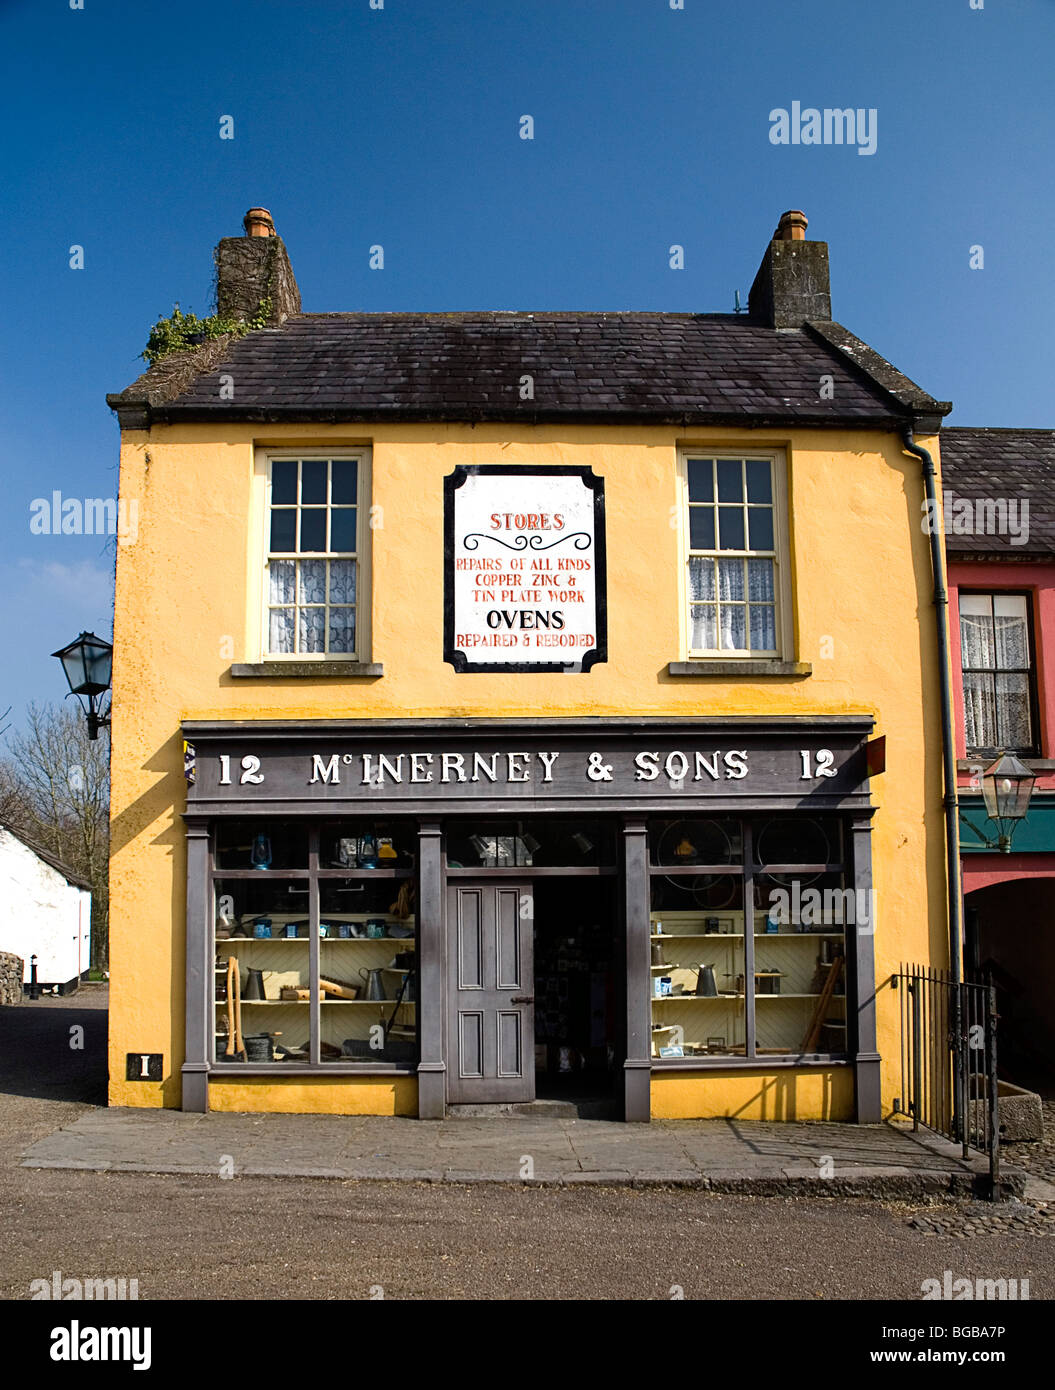 Ireland, County Clare, Bunratty Folk Park. The Village Street denotes life in 19th century Ireland, McInerney & Sons ironmongers Stock Photo